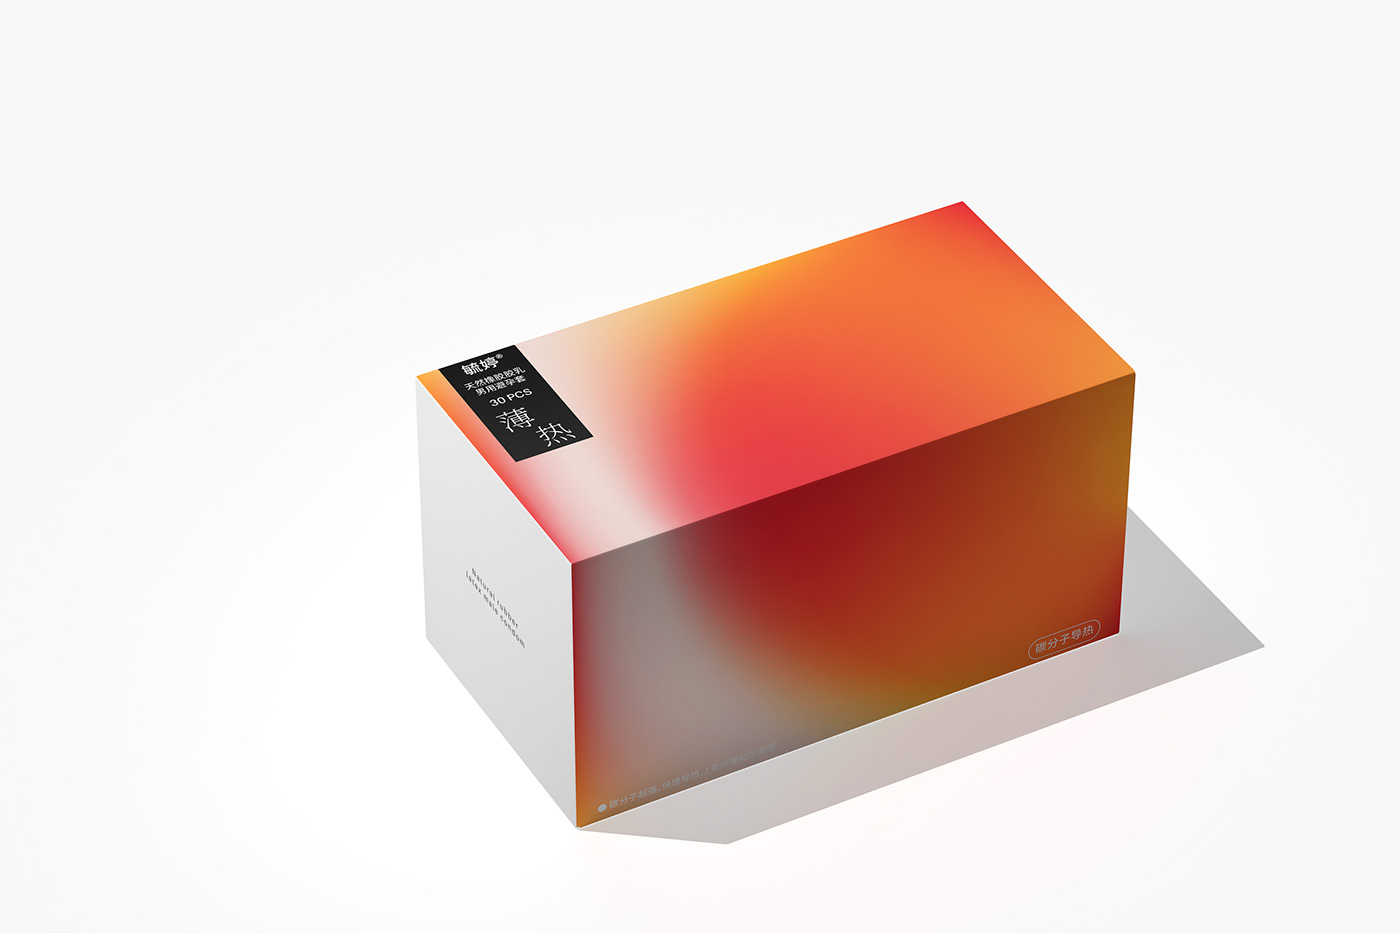 CONDOM Packaging packaging design package box brand identity adobe illustrator